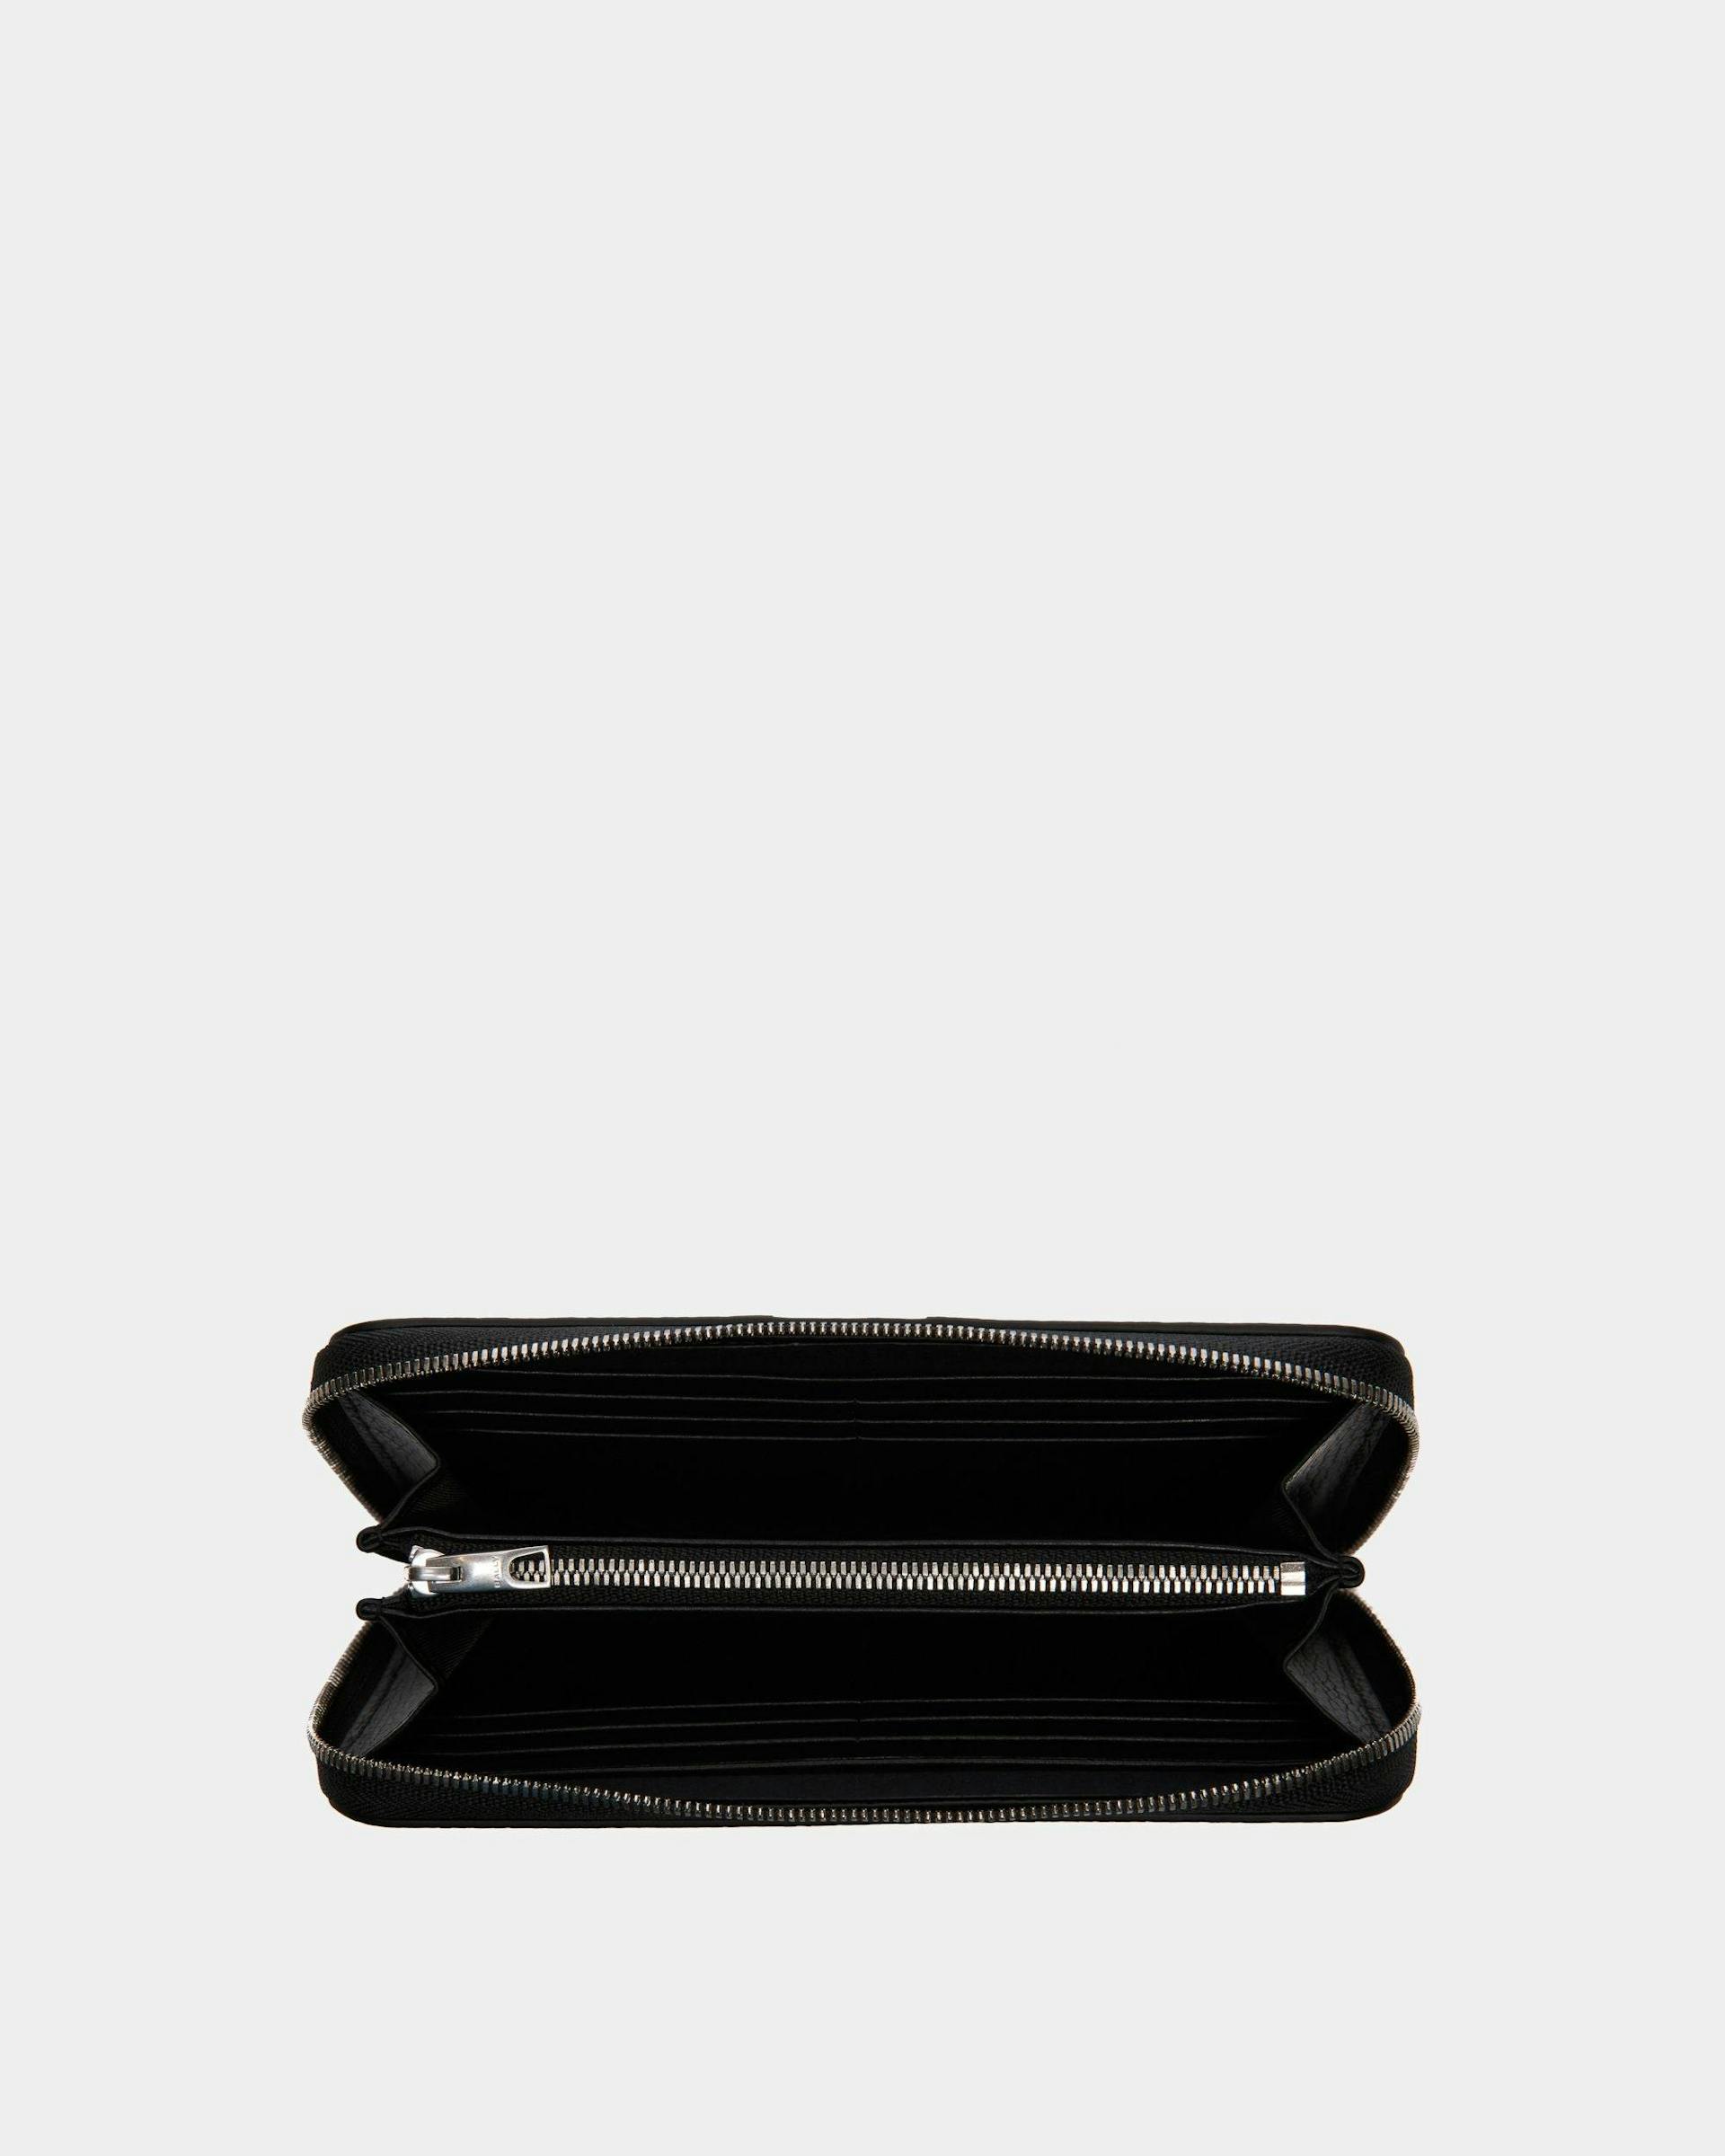 Men's Ribbon Zip Around Wallet in Leather | Bally | Still Life Open / Inside